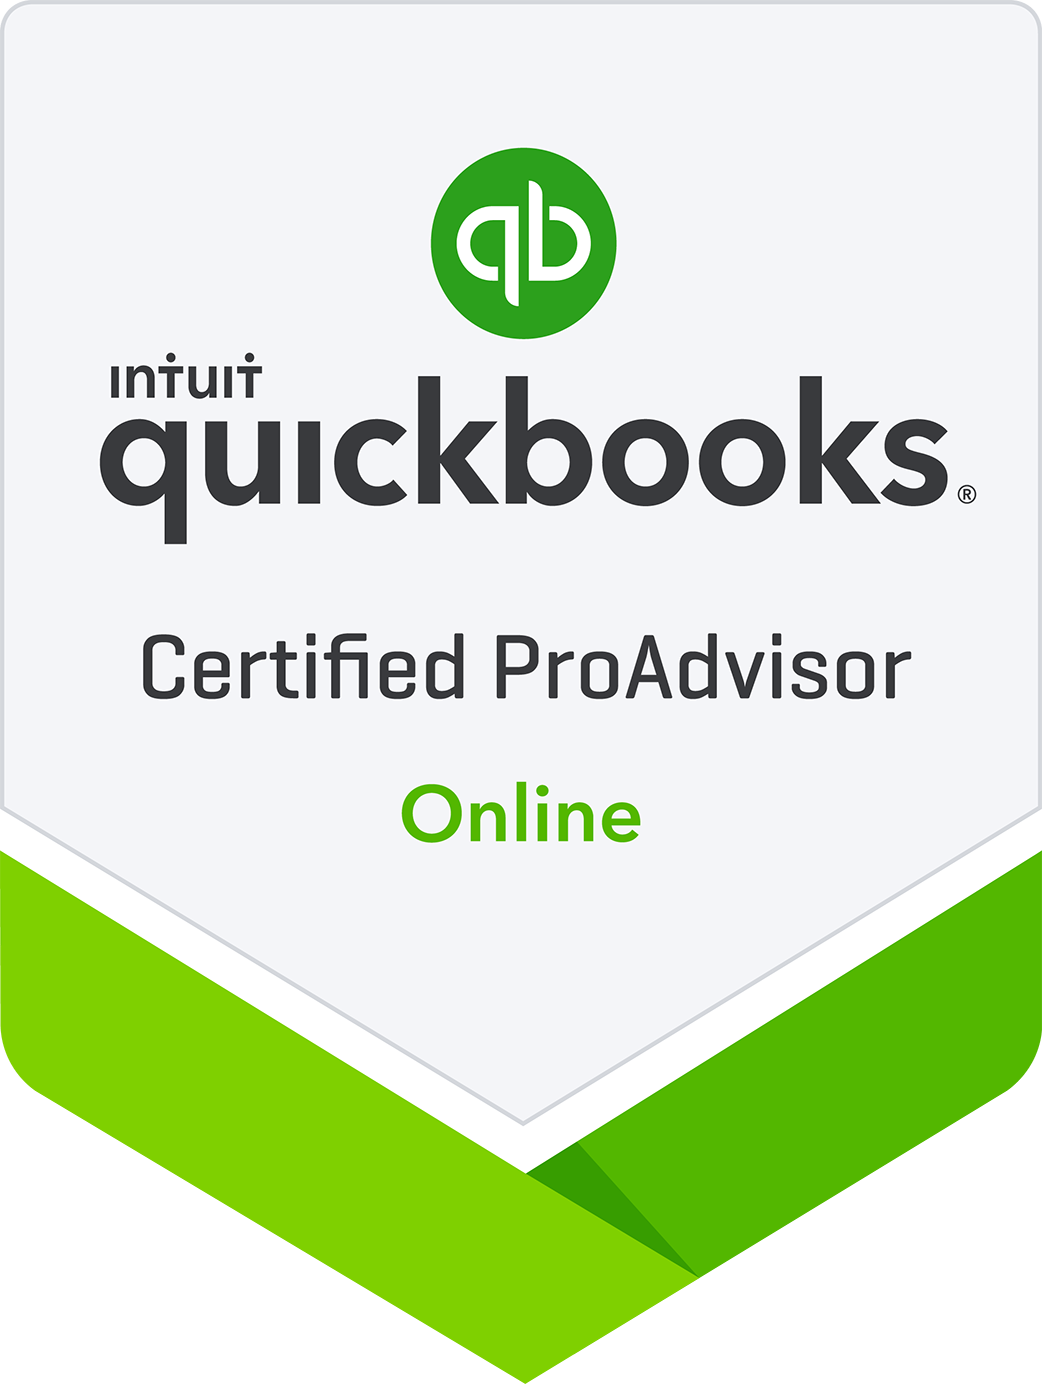 Certified QuickBooks Online Proadvisor badge